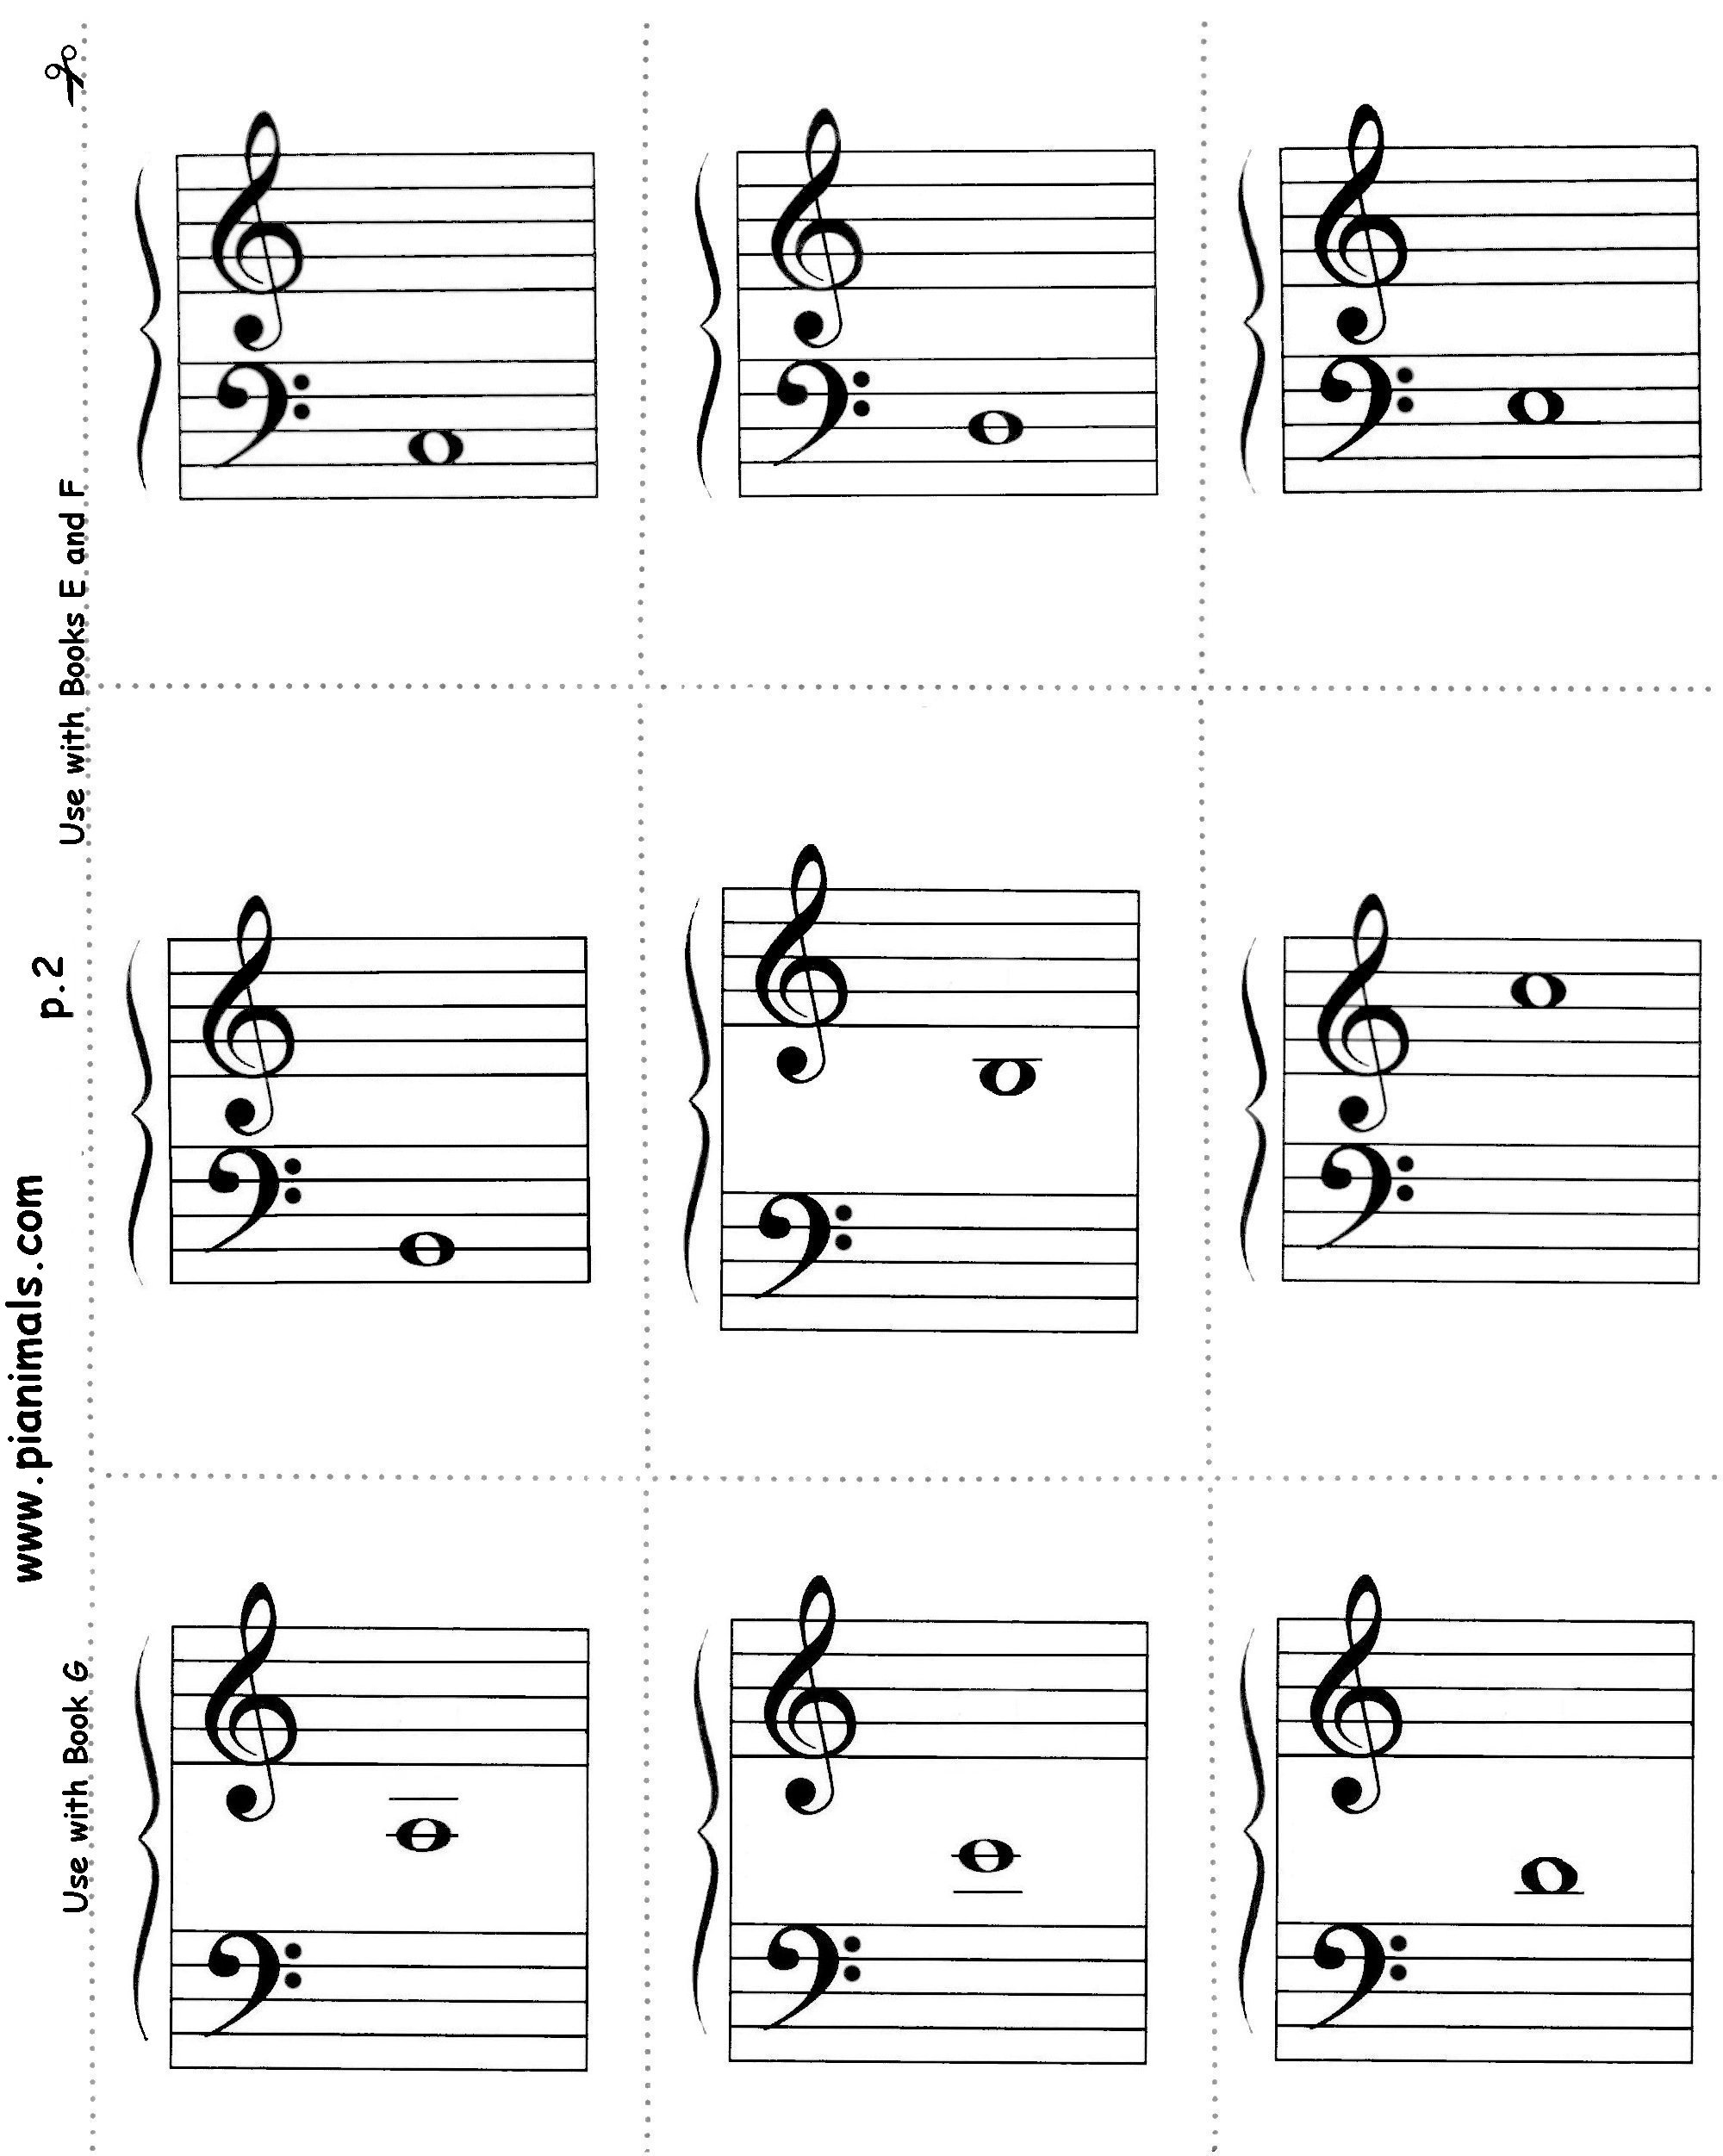 13 Printable Music Worksheets / worksheeto com